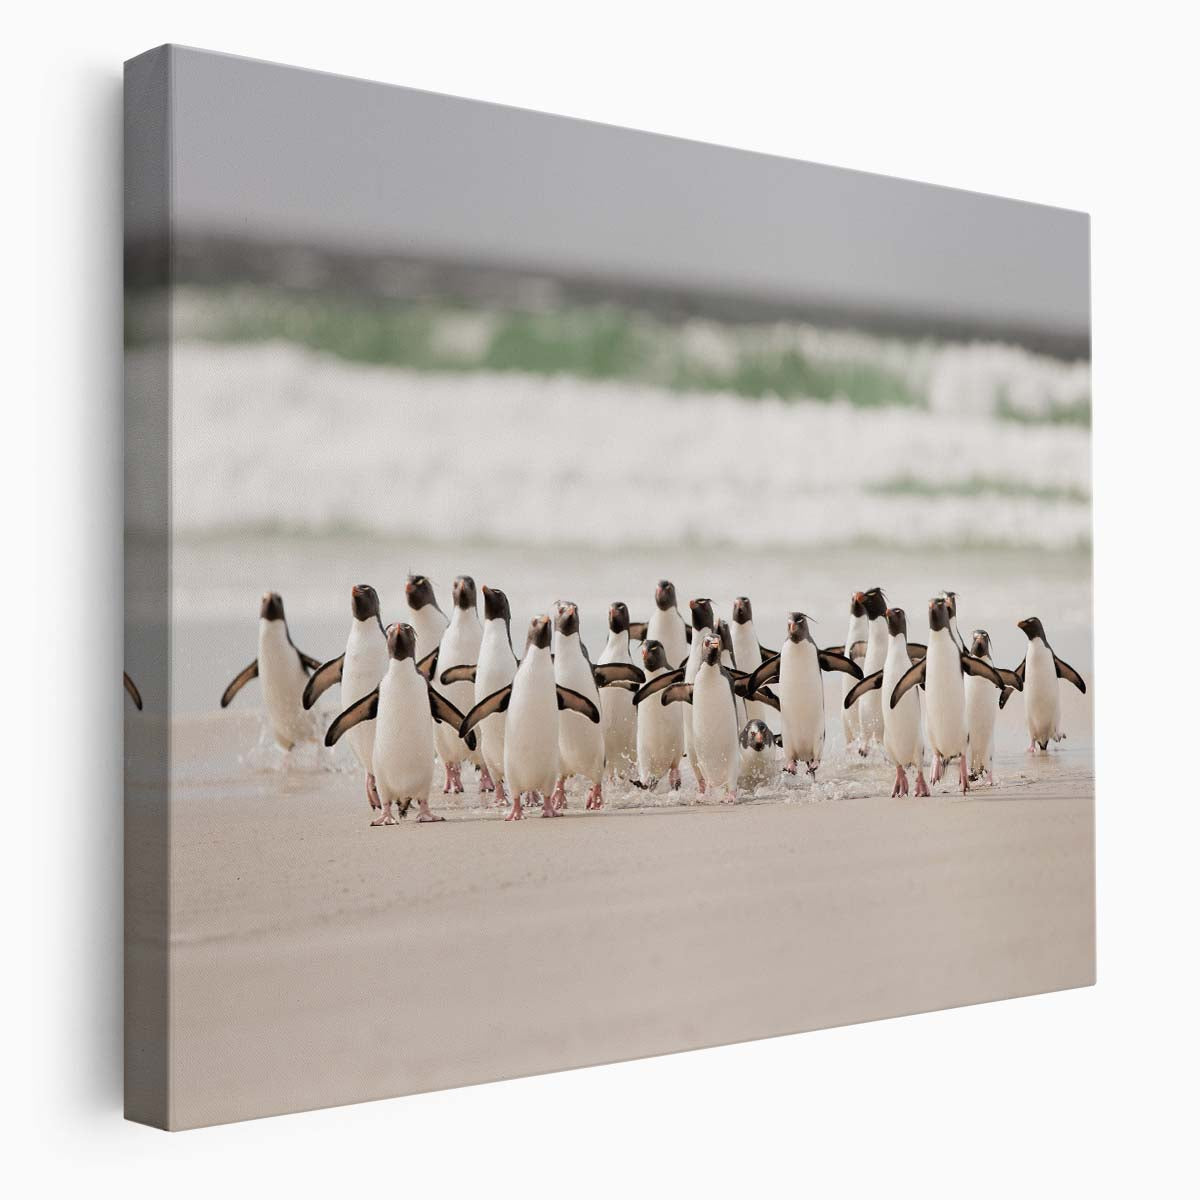 Penguin Flock Seaside Run Coastal Wildlife Wall Art by Luxuriance Designs. Made in USA.